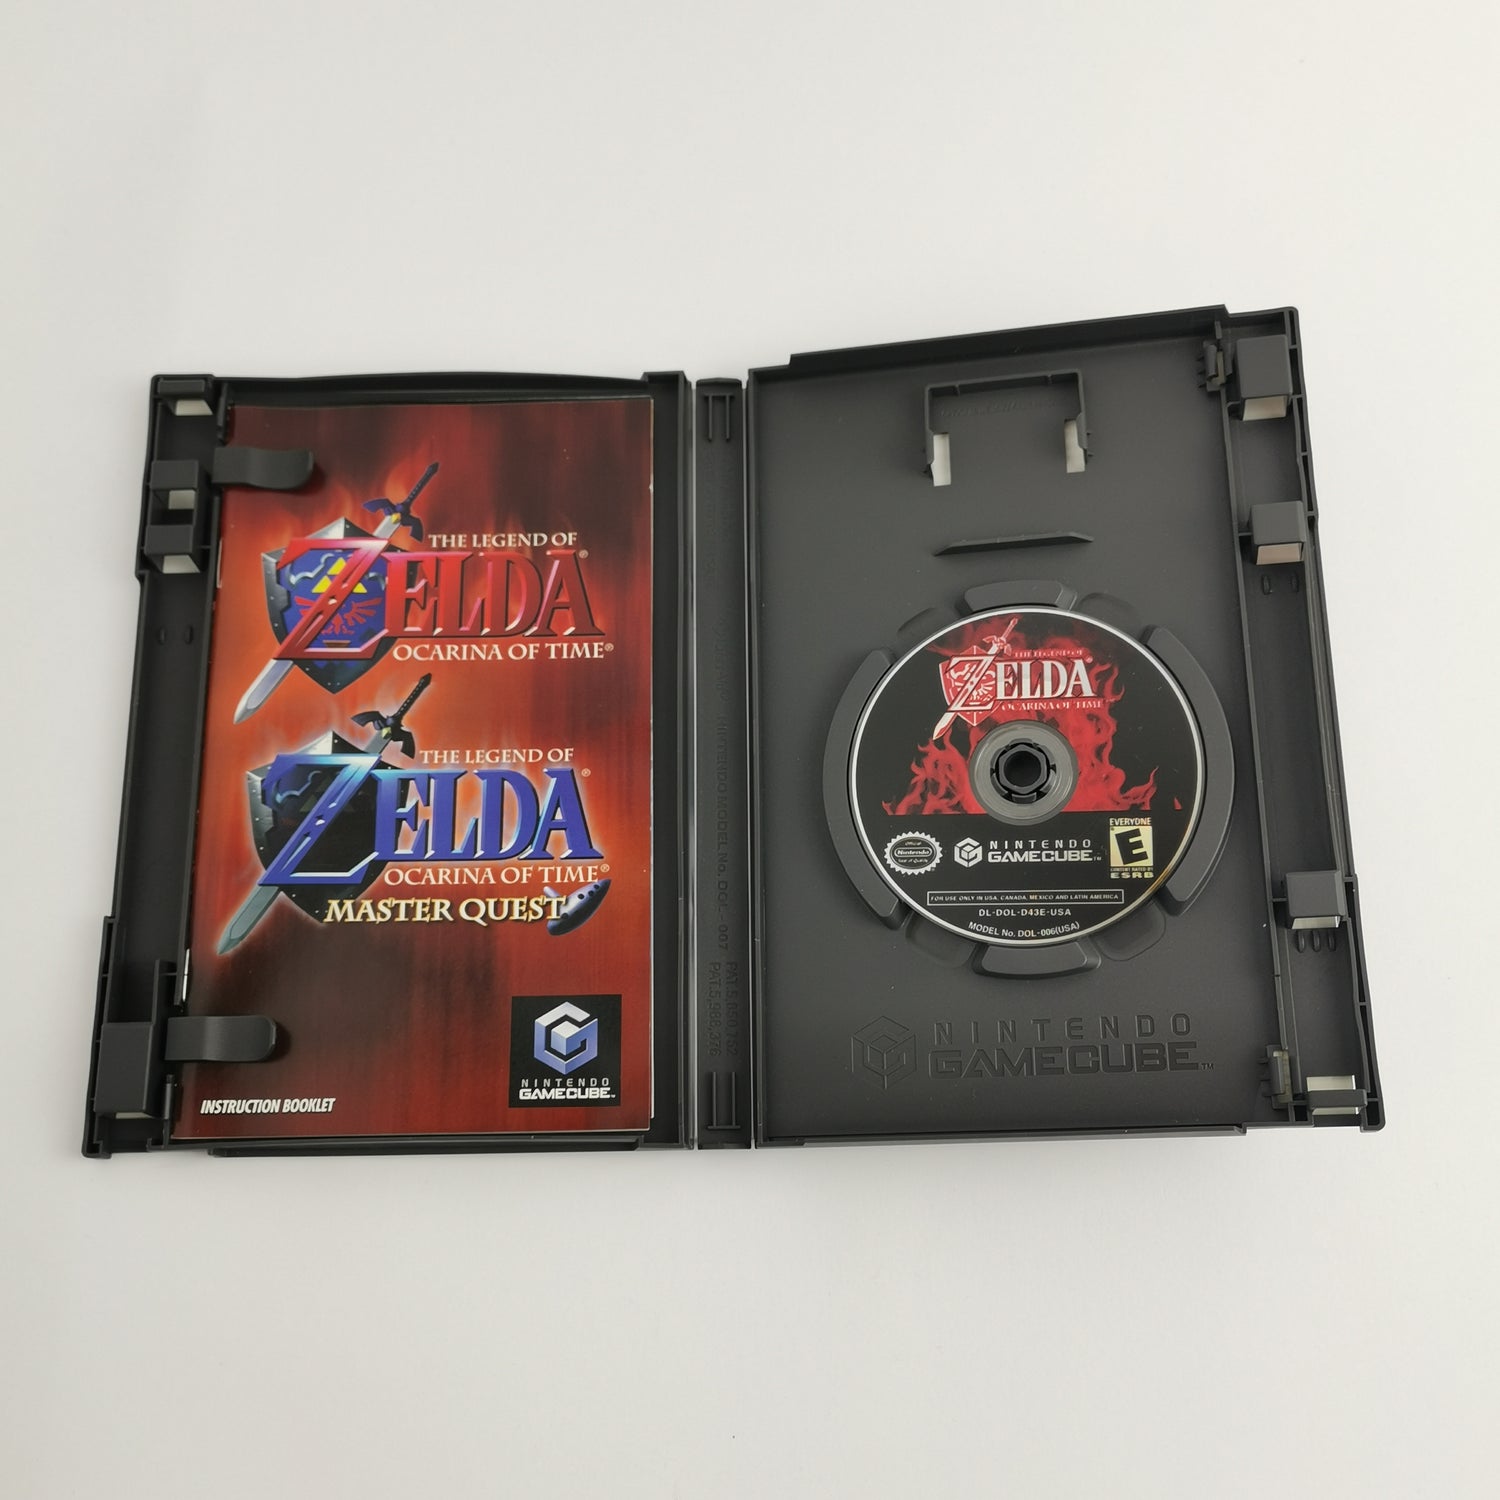 Nintendo Gamecube Game: The Legend of Zelda Ocarina of Time & Master Quest USA